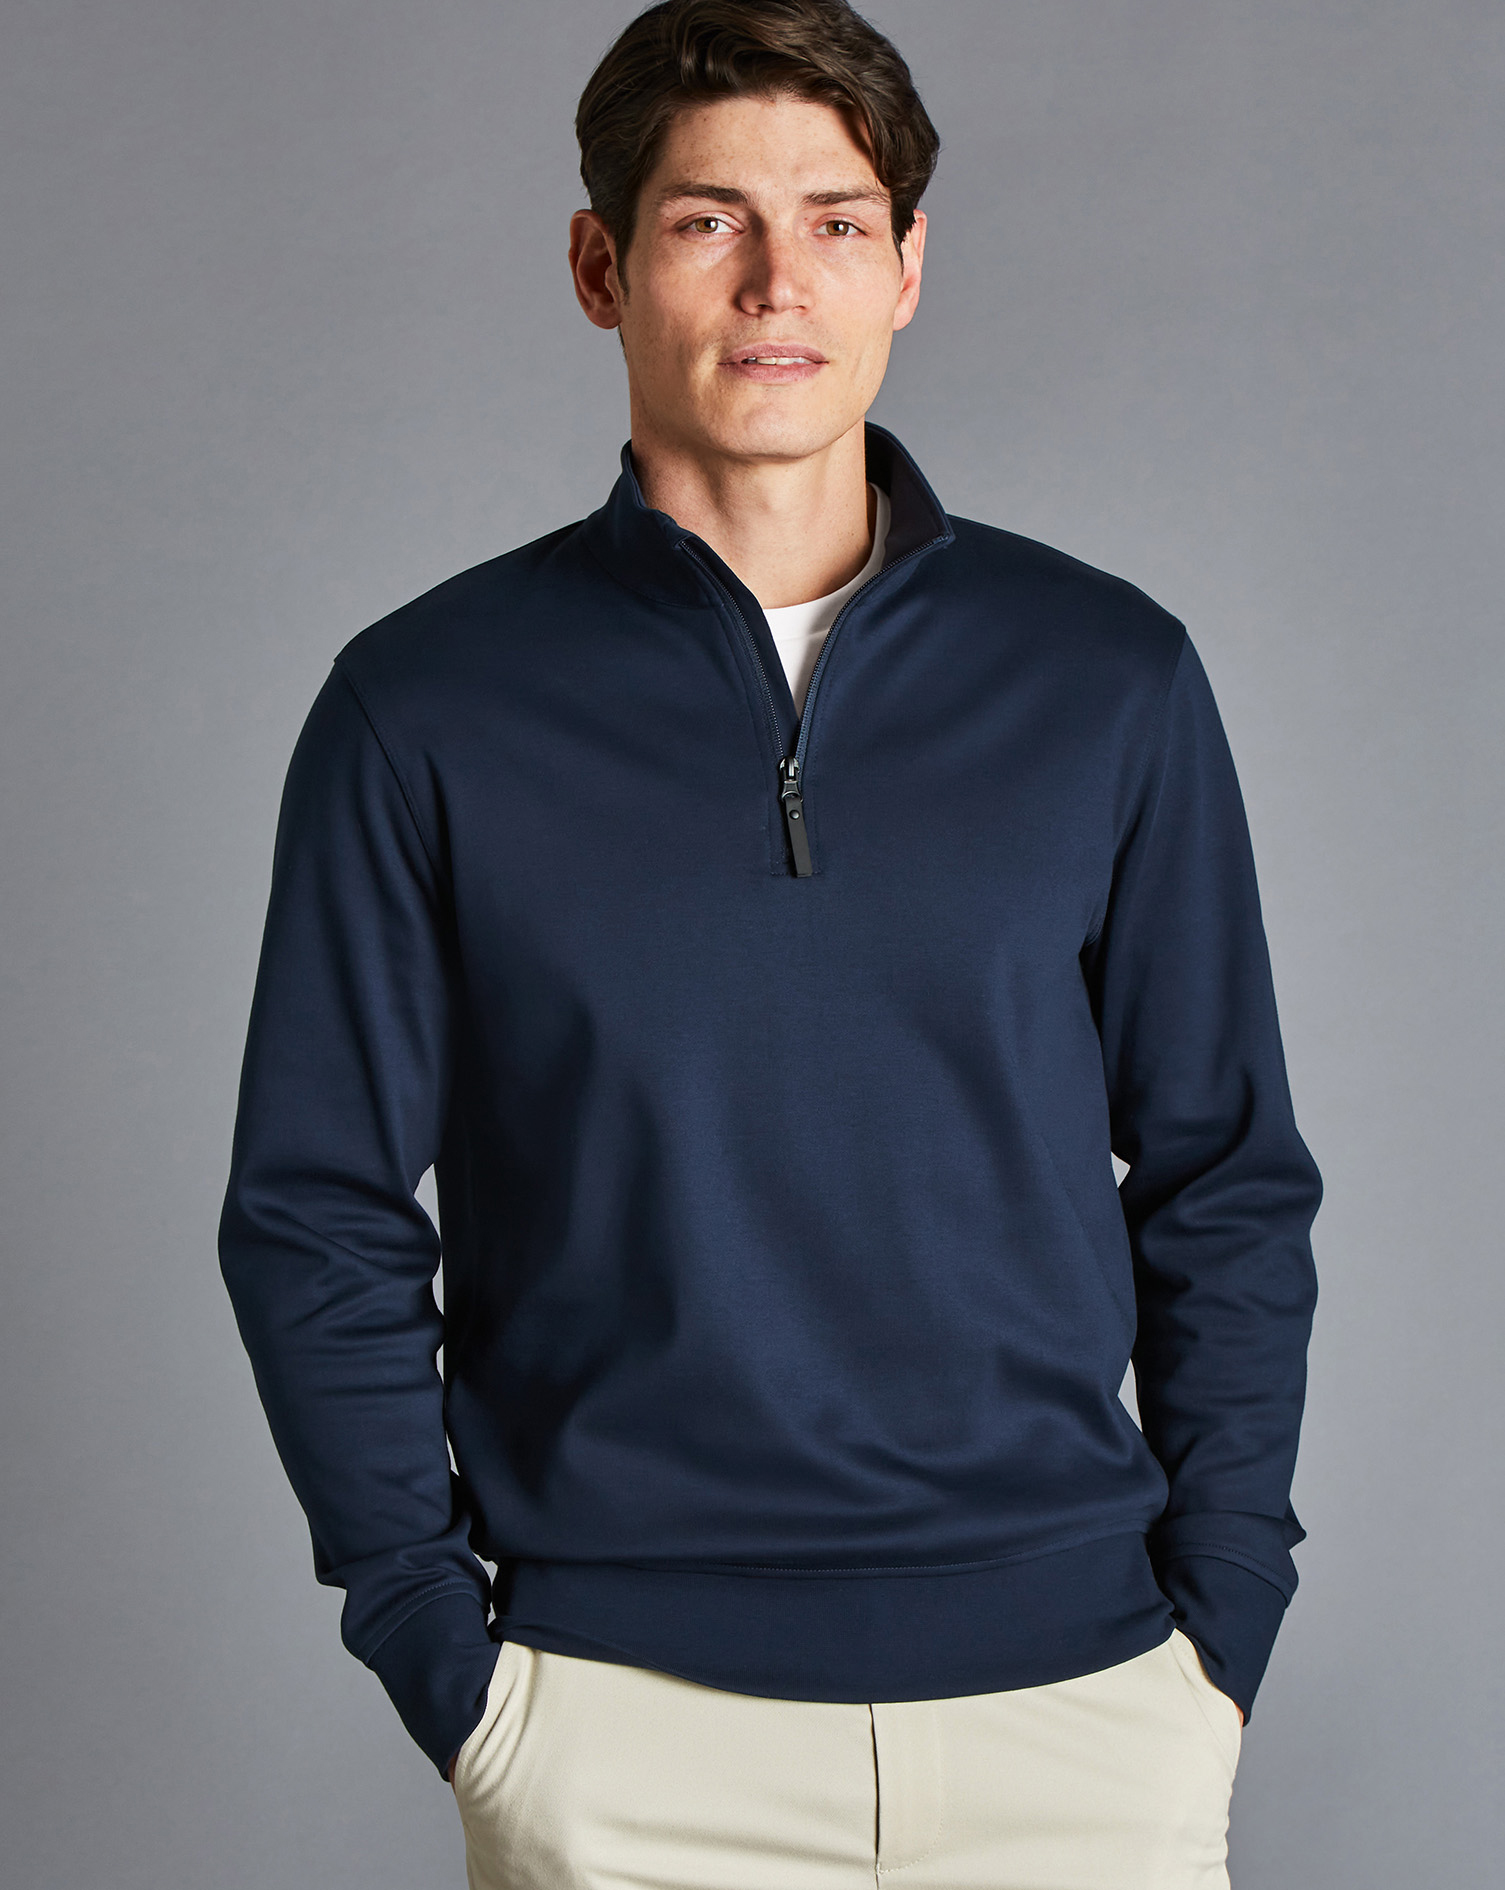 Men's Charles Tyrwhitt Performance Zip-Neck Sweater - Navy Blue Size Medium Cotton
